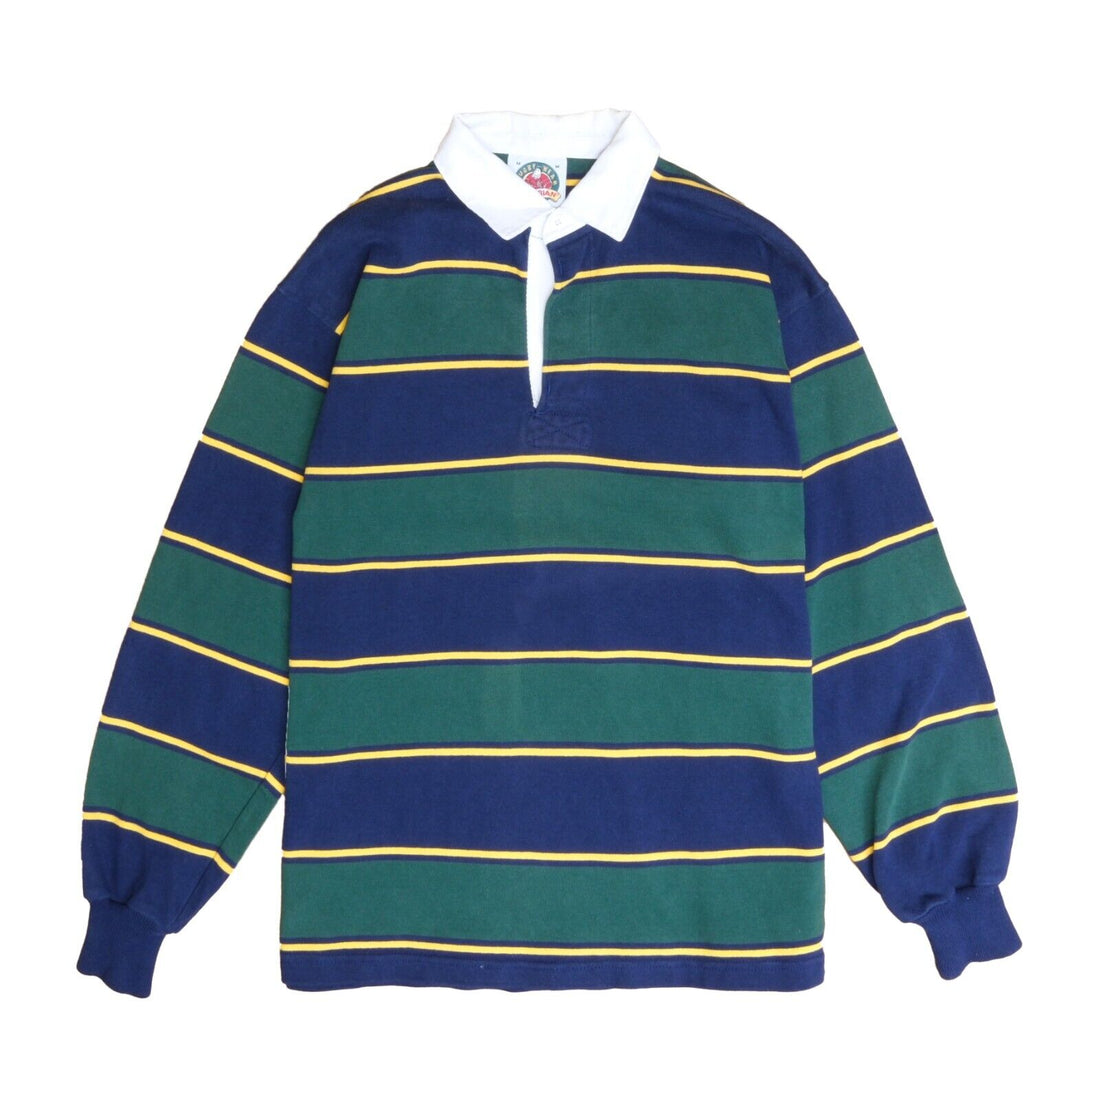 Vintage Barbarian Rugby Shirt Size Medium Green Blue Striped